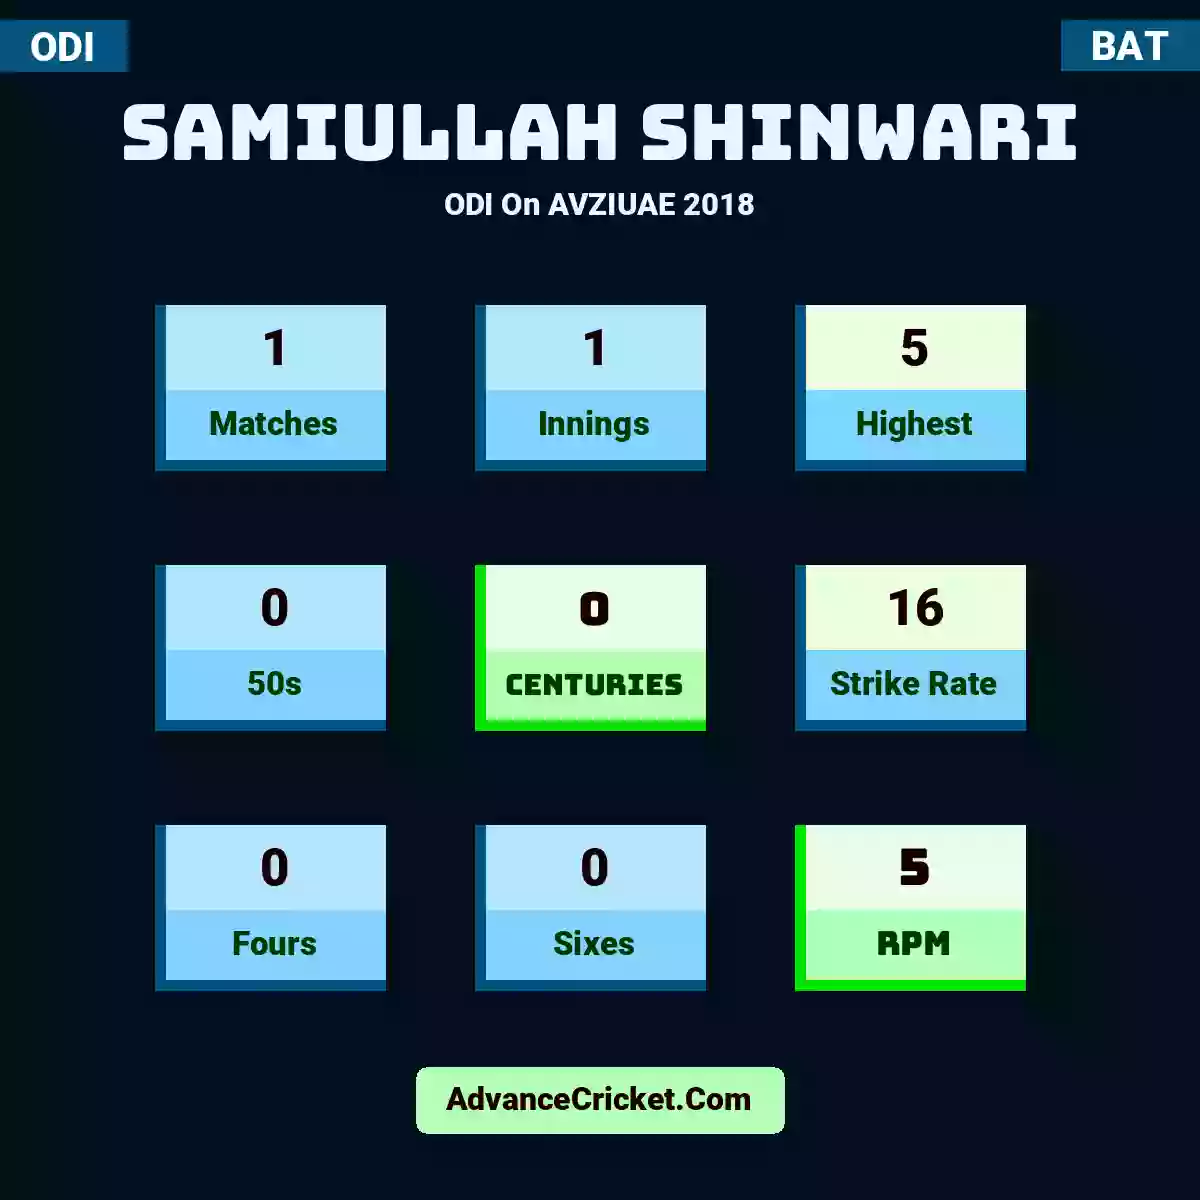 Samiullah Shinwari ODI  On AVZIUAE 2018, Samiullah Shinwari played 1 matches, scored 5 runs as highest, 0 half-centuries, and 0 centuries, with a strike rate of 16. S.Shinwari hit 0 fours and 0 sixes, with an RPM of 5.